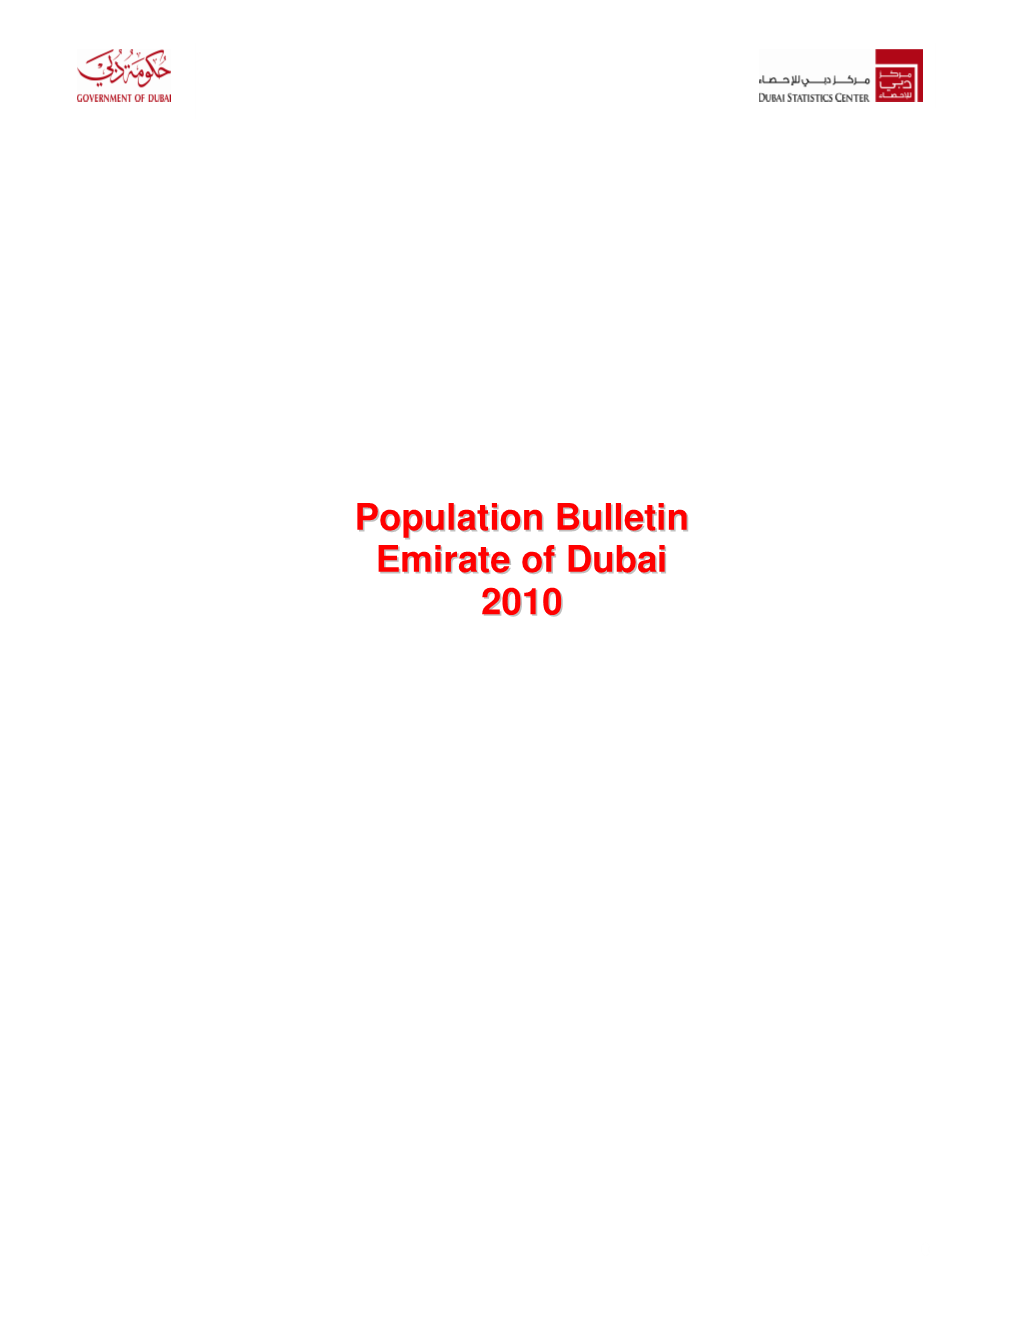 Population Bulletin Emirate of Dubai 2010